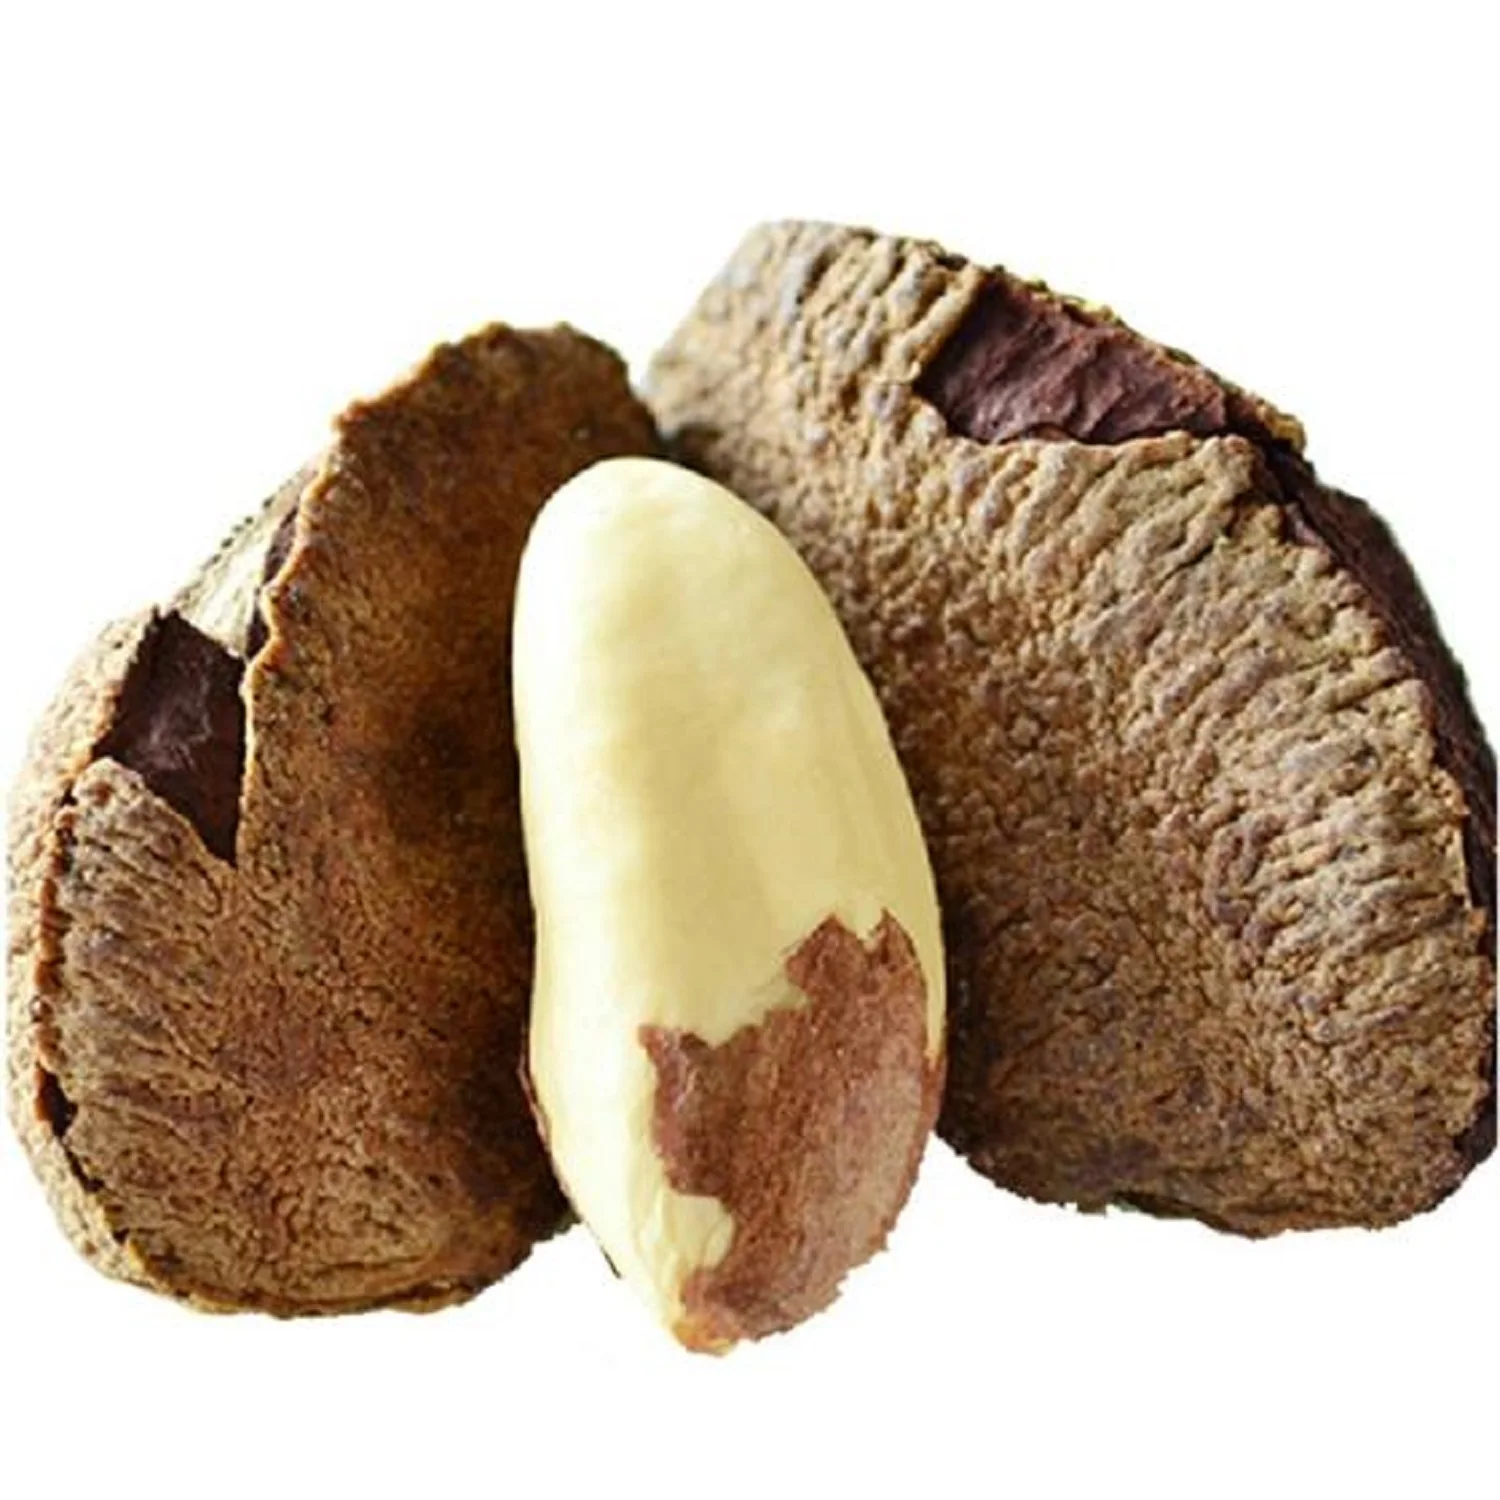 Organic Brazil Nuts / Brazil Nuts Wholesale price